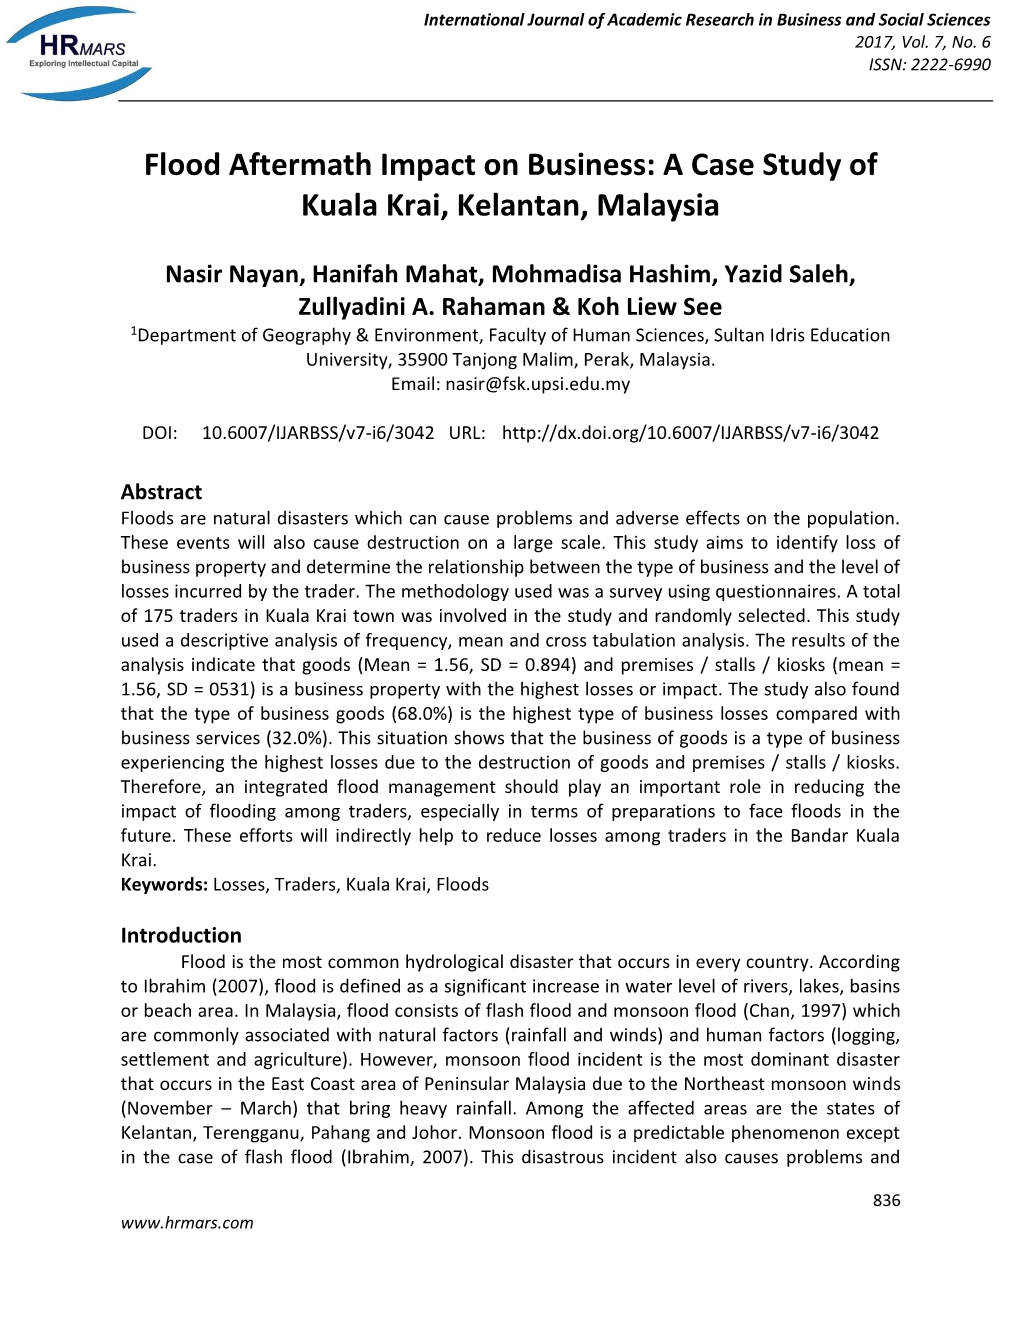 A Case Study of Kuala Krai, Kelantan, Malaysia